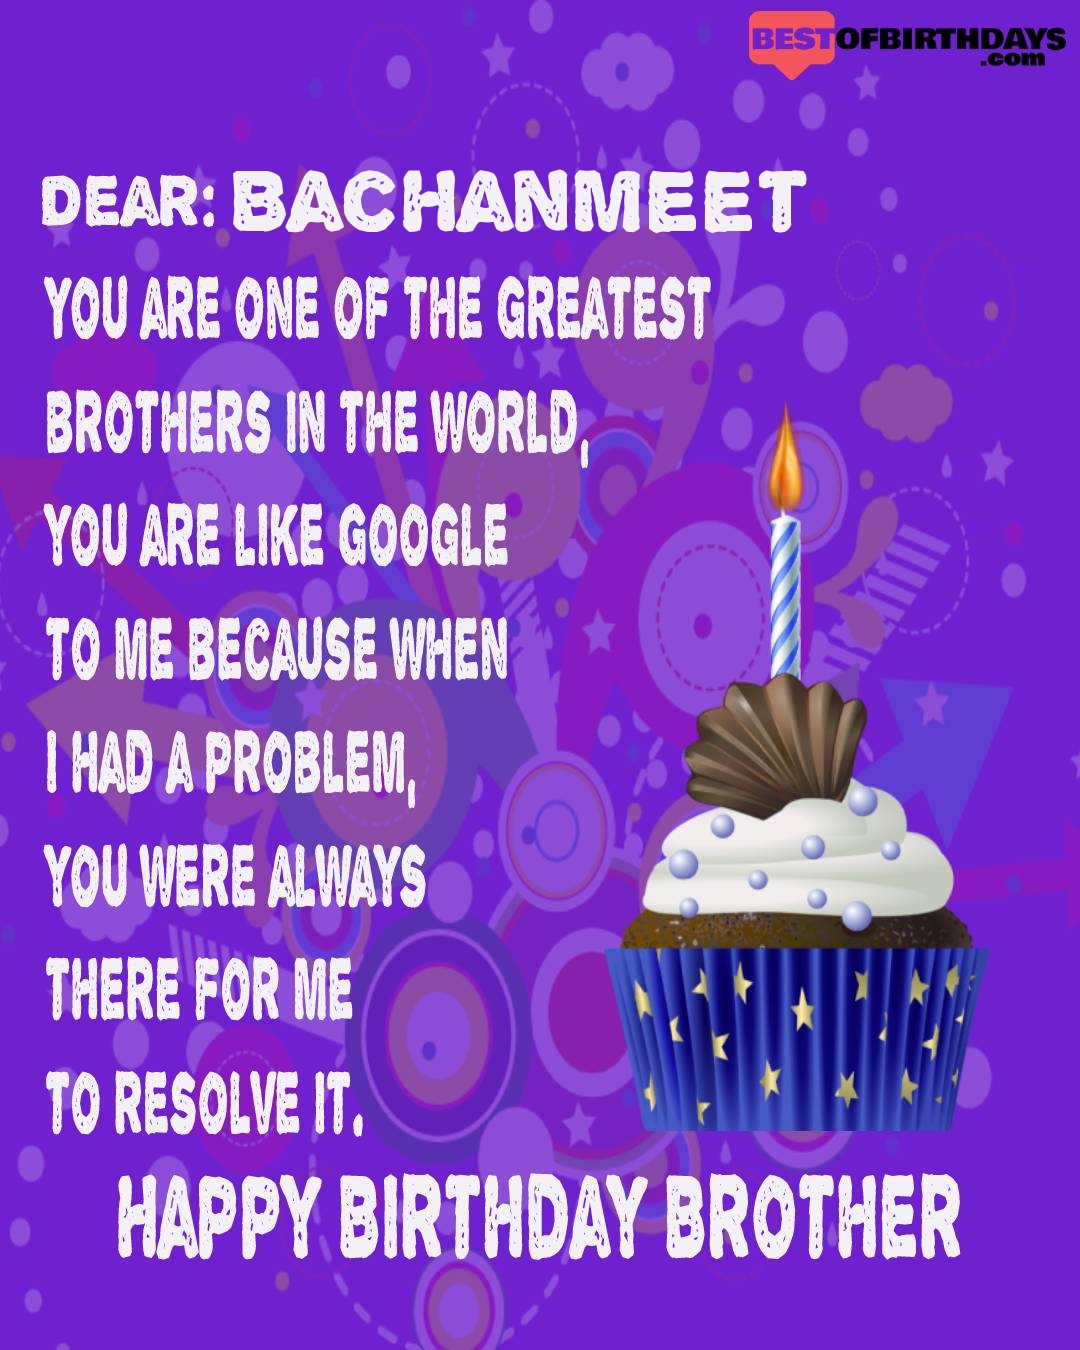 Happy birthday bachanmeet bhai brother bro